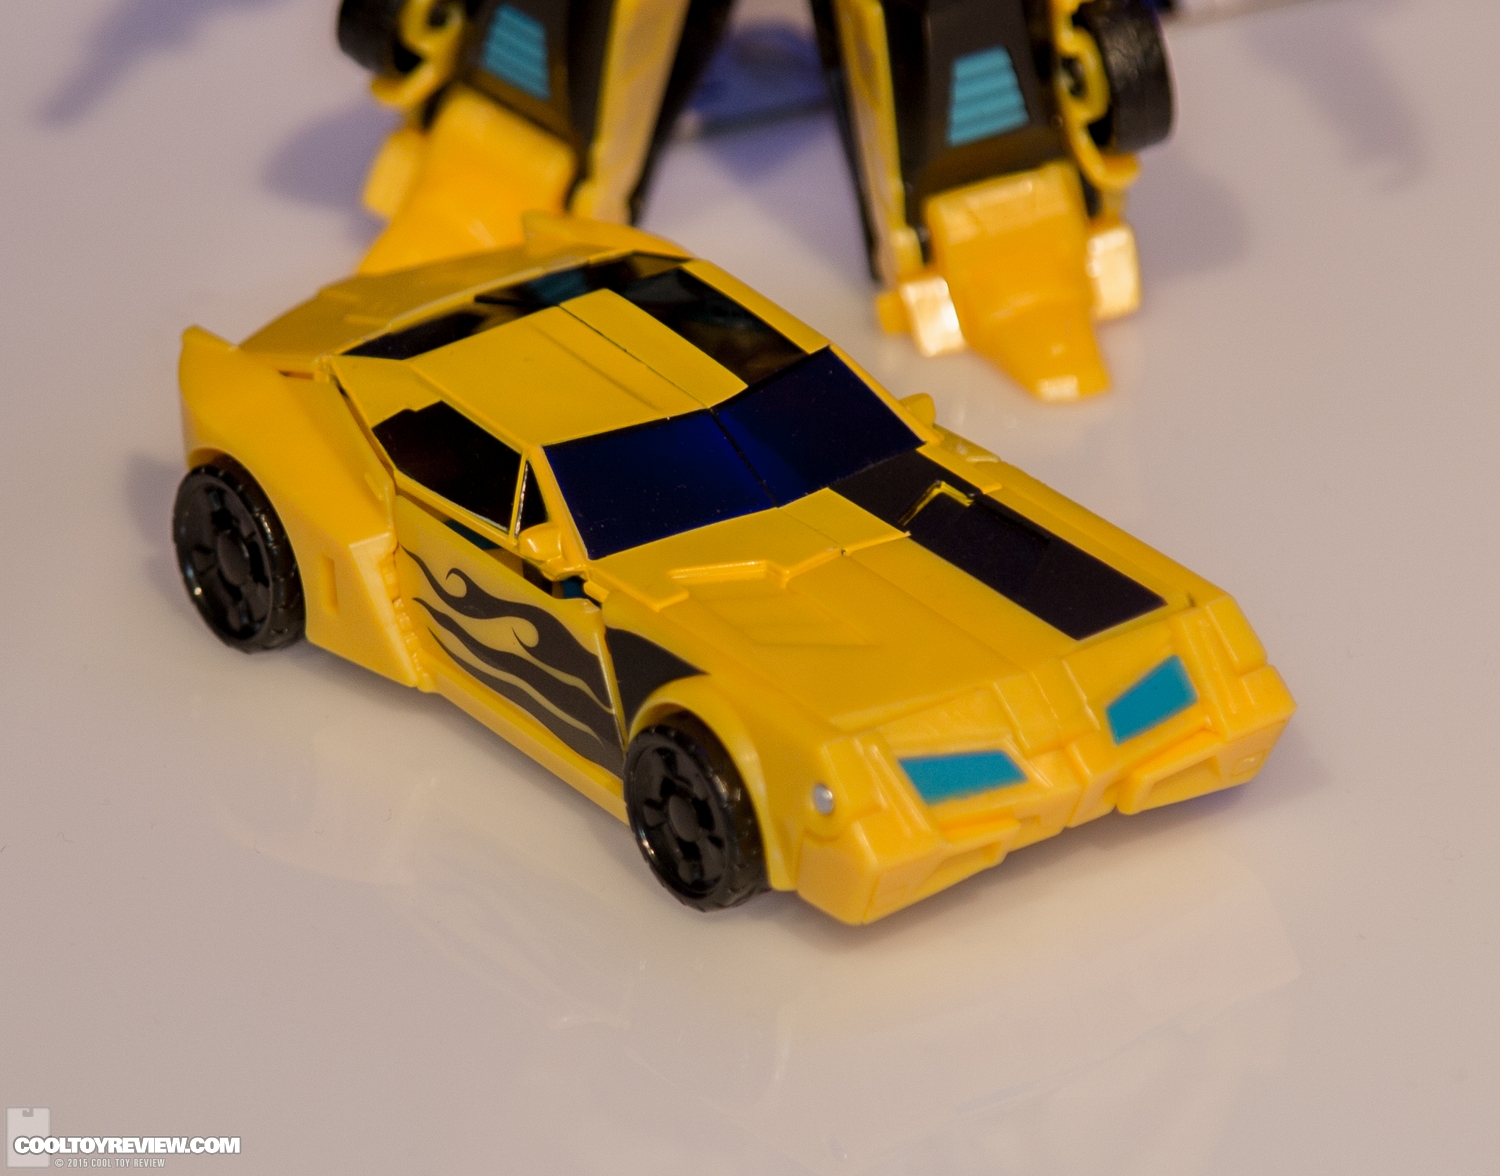 NYCC-2015-Hasbro-Transformers-002.jpg